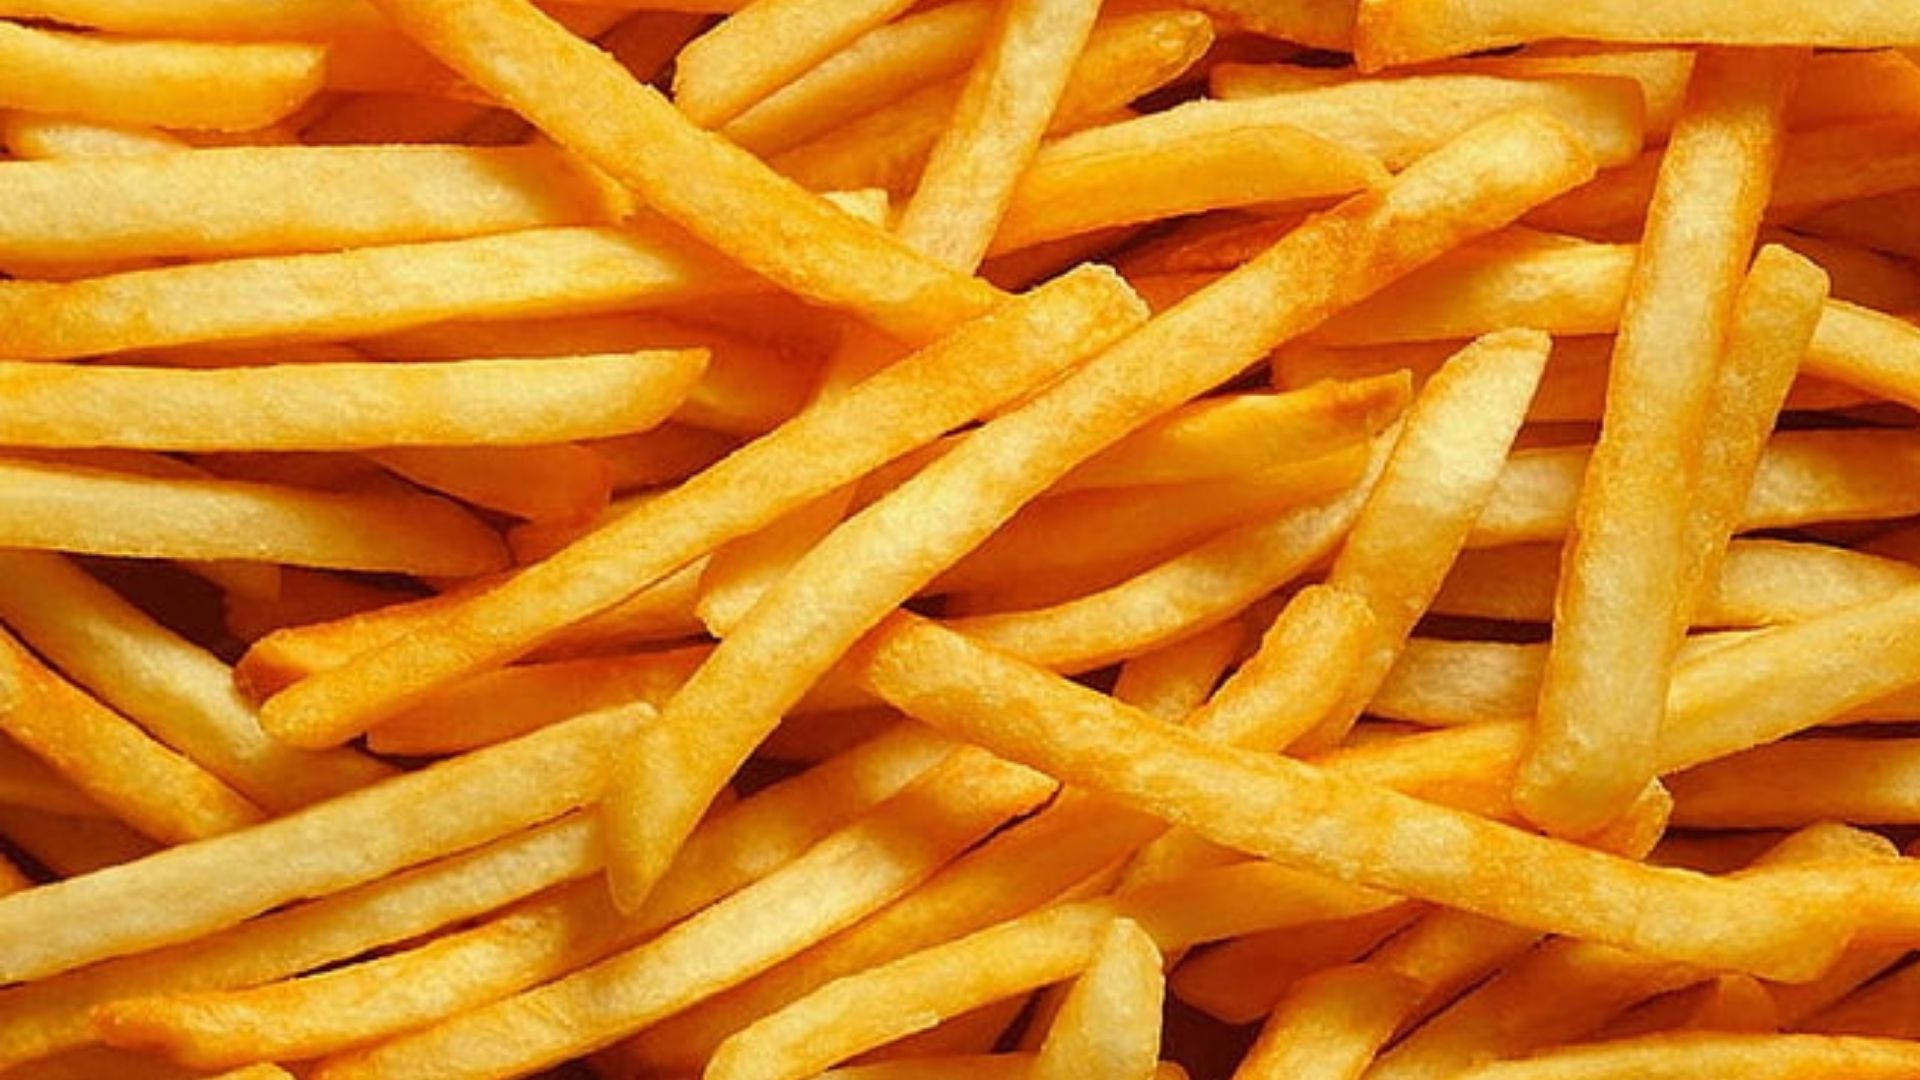 Crispy Golden French Fries Background